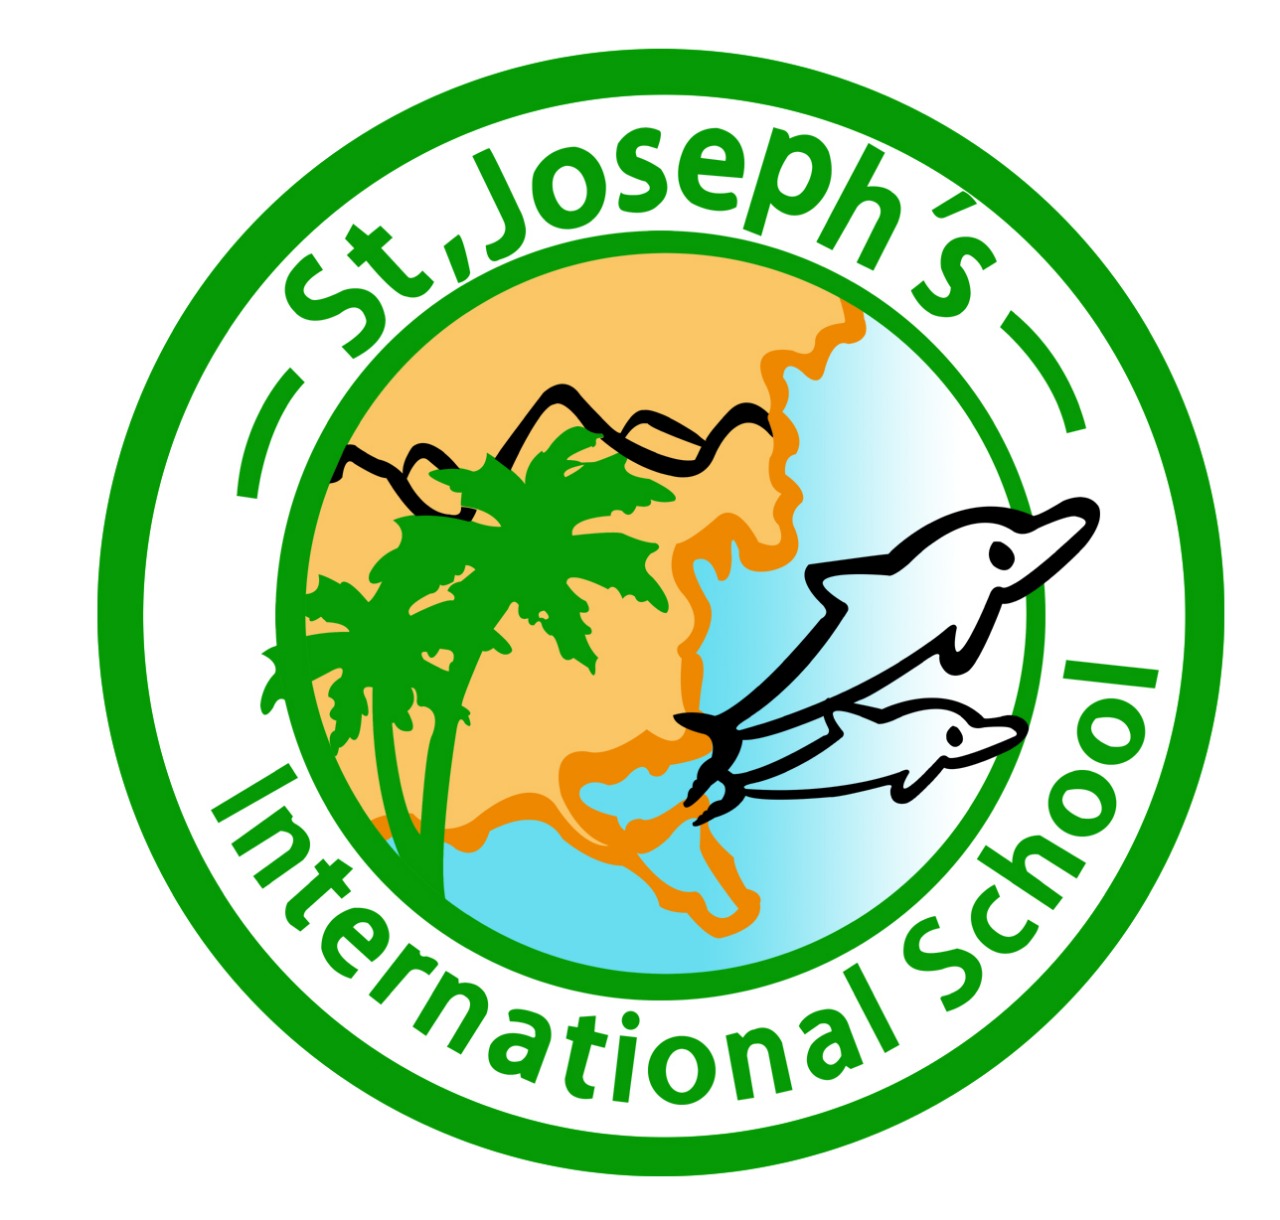 St Joseph's American School